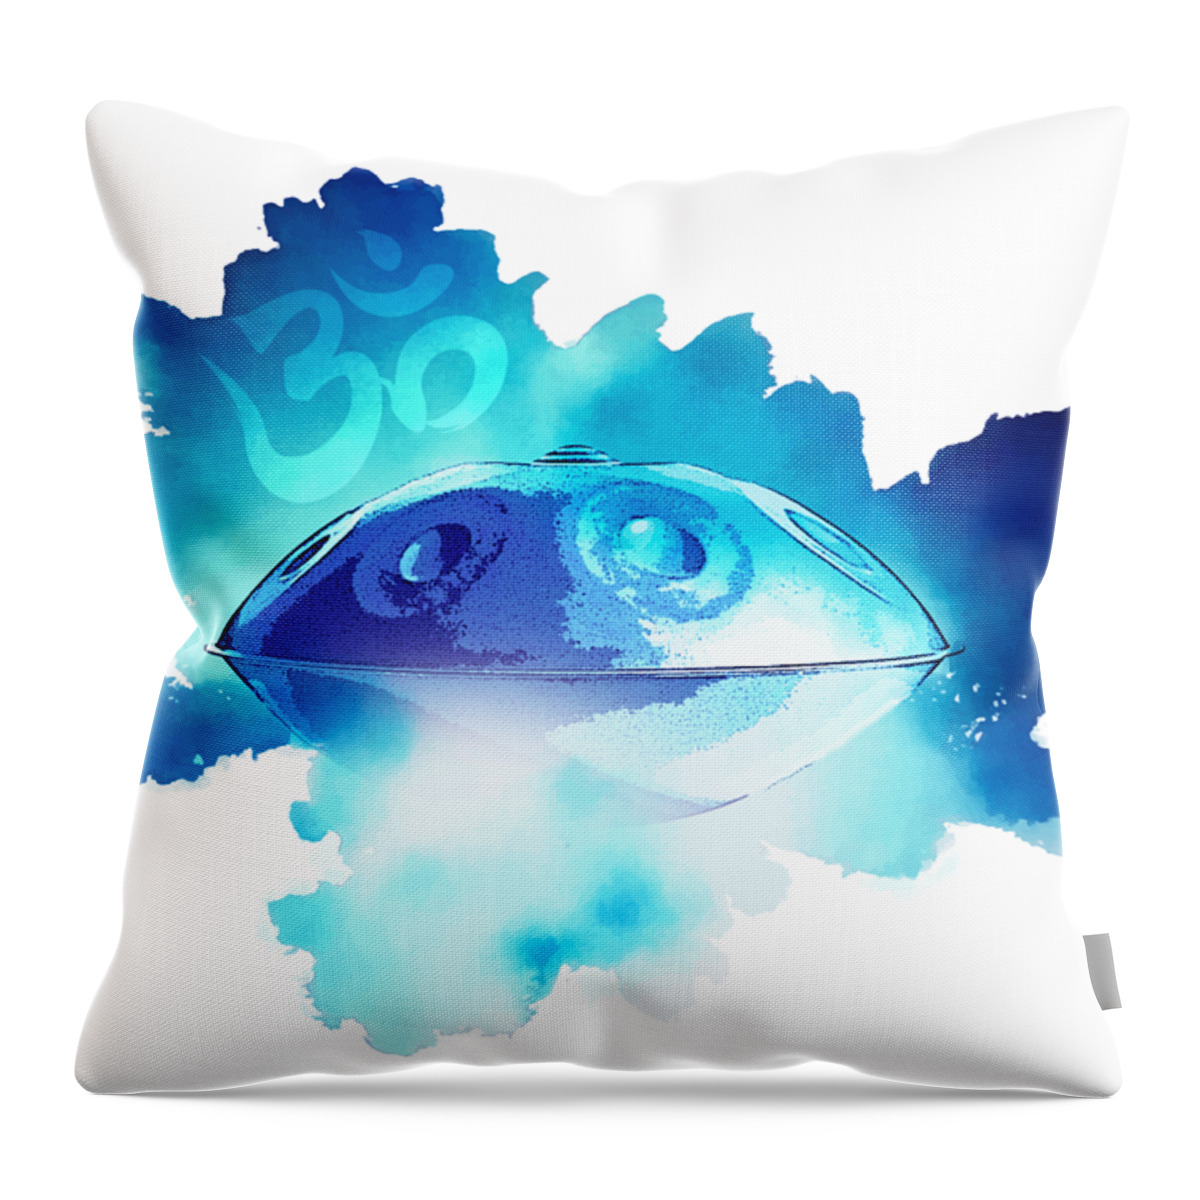 Handpan Throw Pillow featuring the digital art Handpan OM in blue by Alexa Szlavics